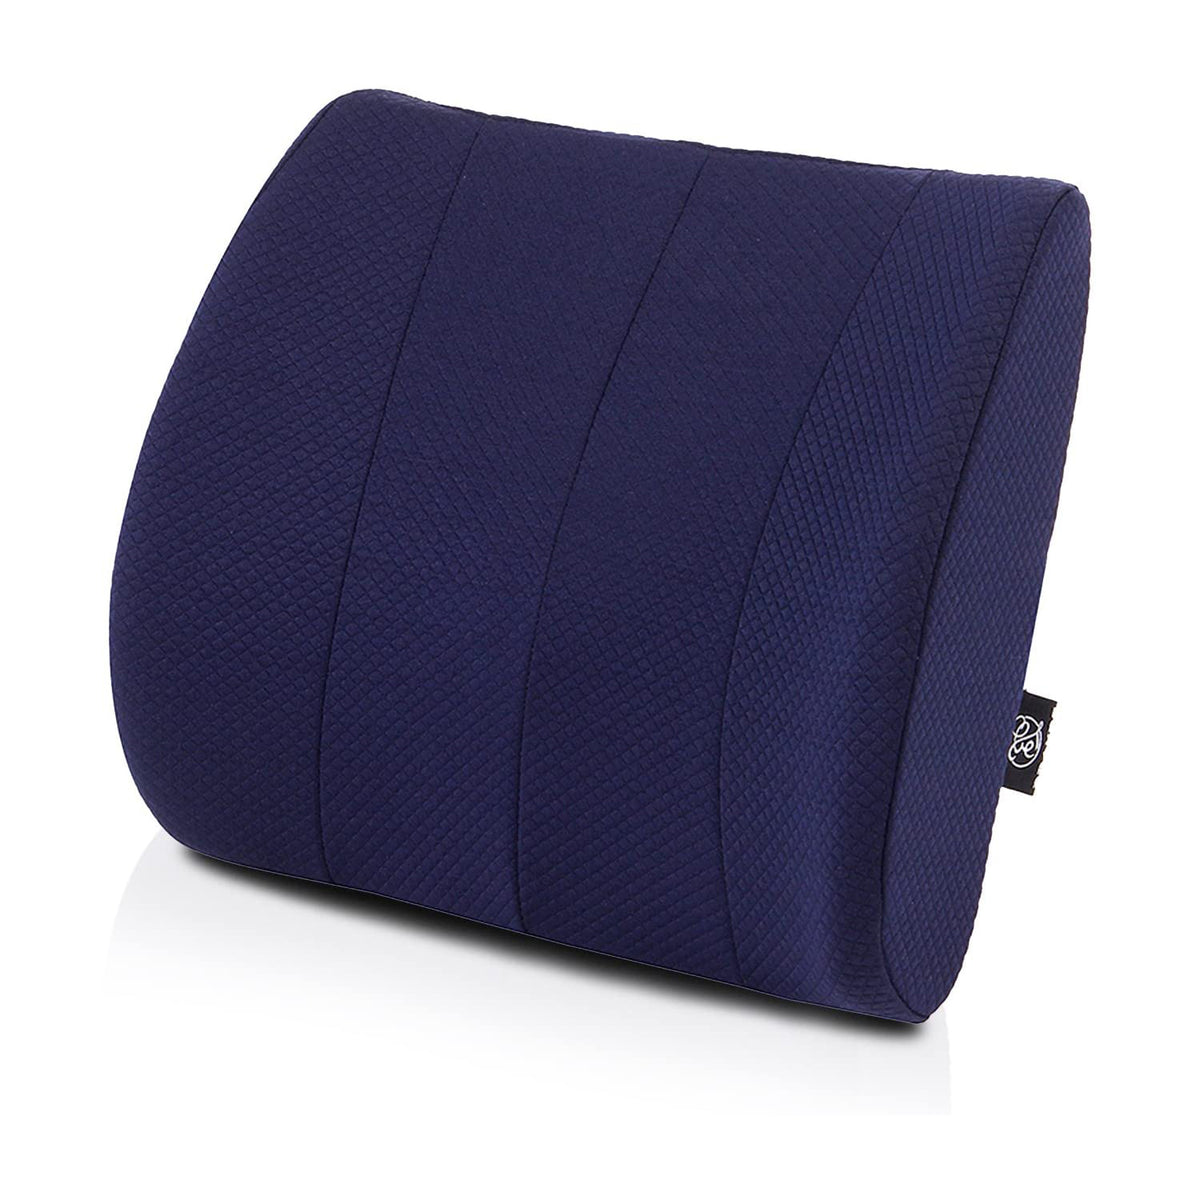 Medium Back Pillow for Lumbar Support | Memory Foam Cushion for Back Pain